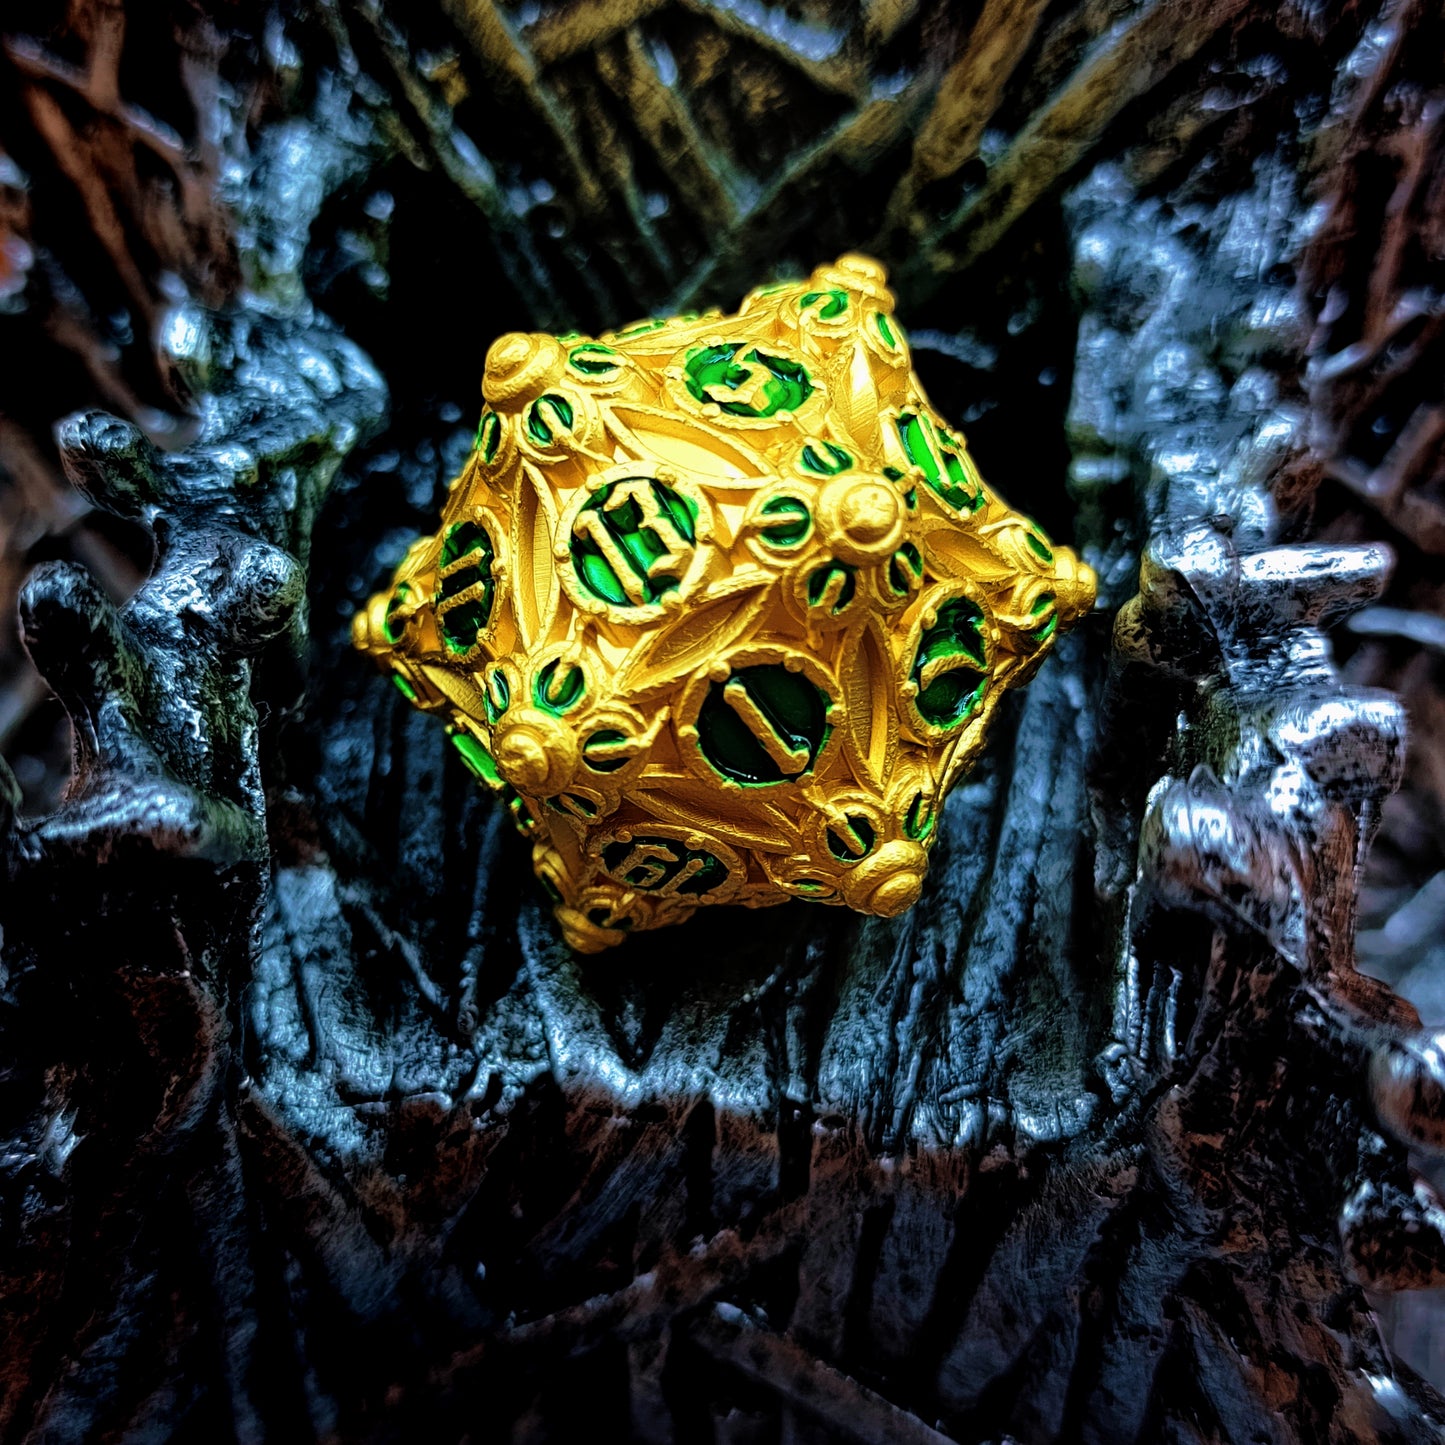 FREE Today: Enchanted Morningstars Yellow Green Metal Dice  (Give away a random dice set)